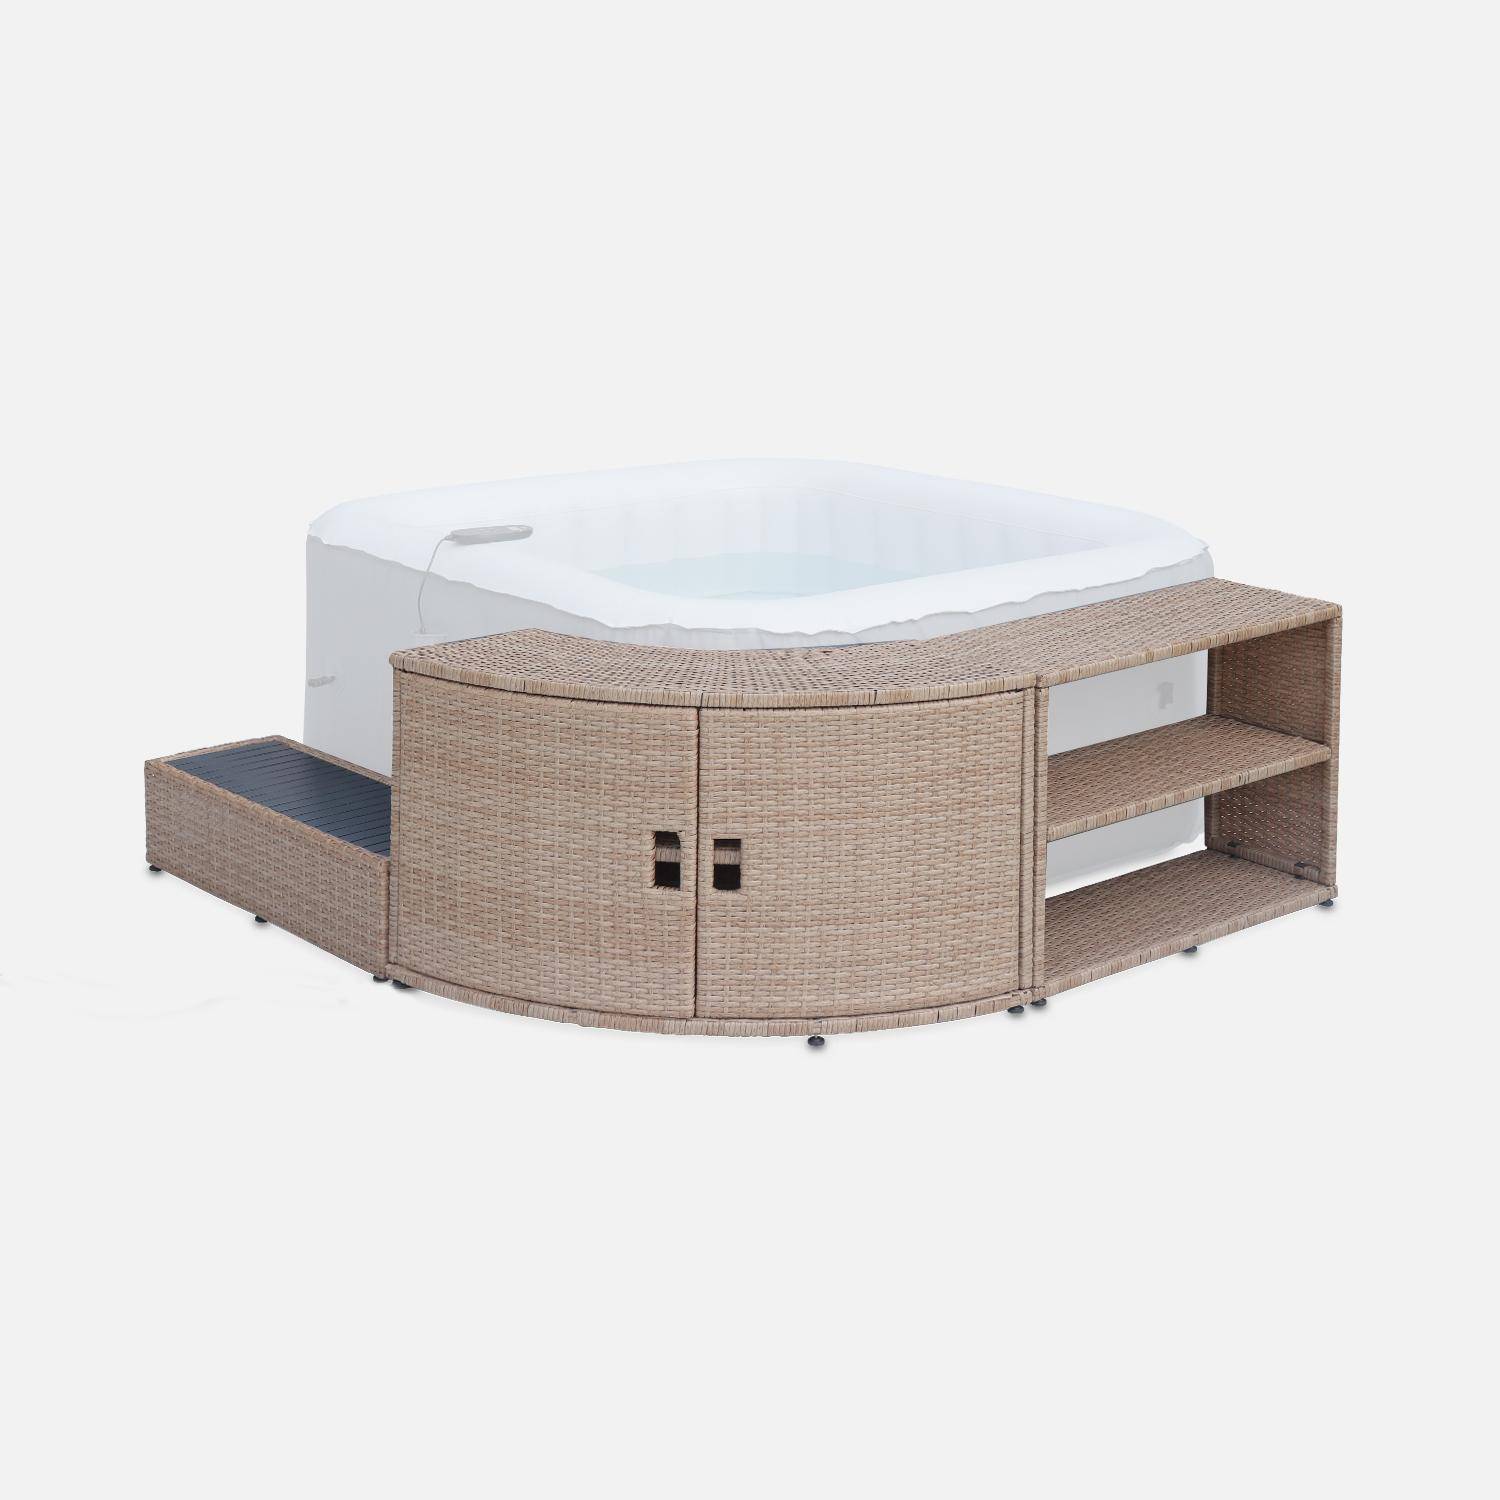 Vierkante opblaasbare spa voor 4 personen, MSPA, antivriessysteem en cover, 160cm + frame van geweven hars Photo3